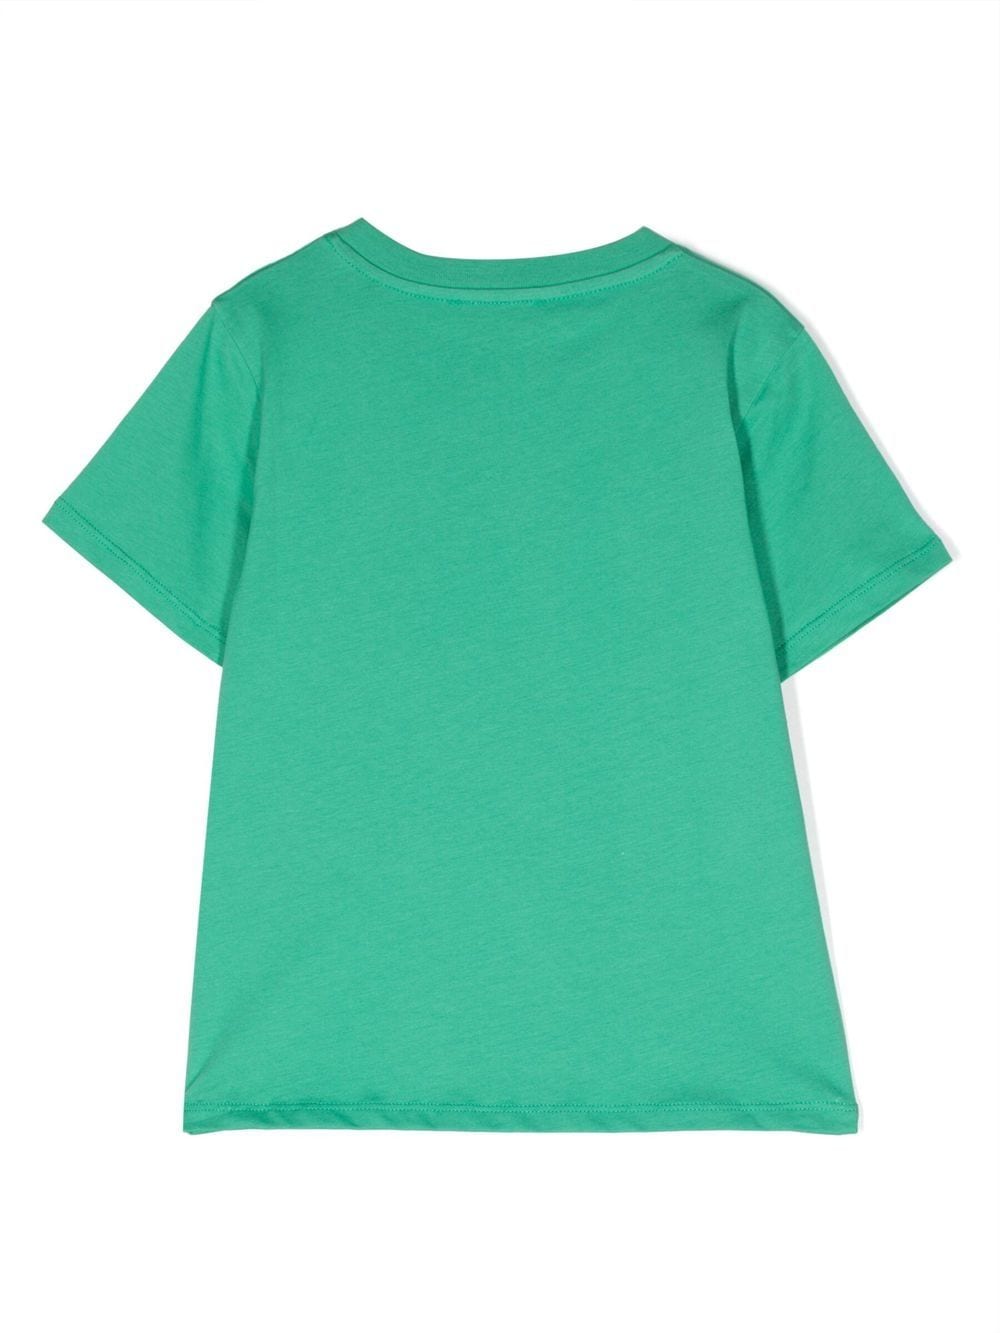 Balmain Kids T-shirt verde con logo in rilievo